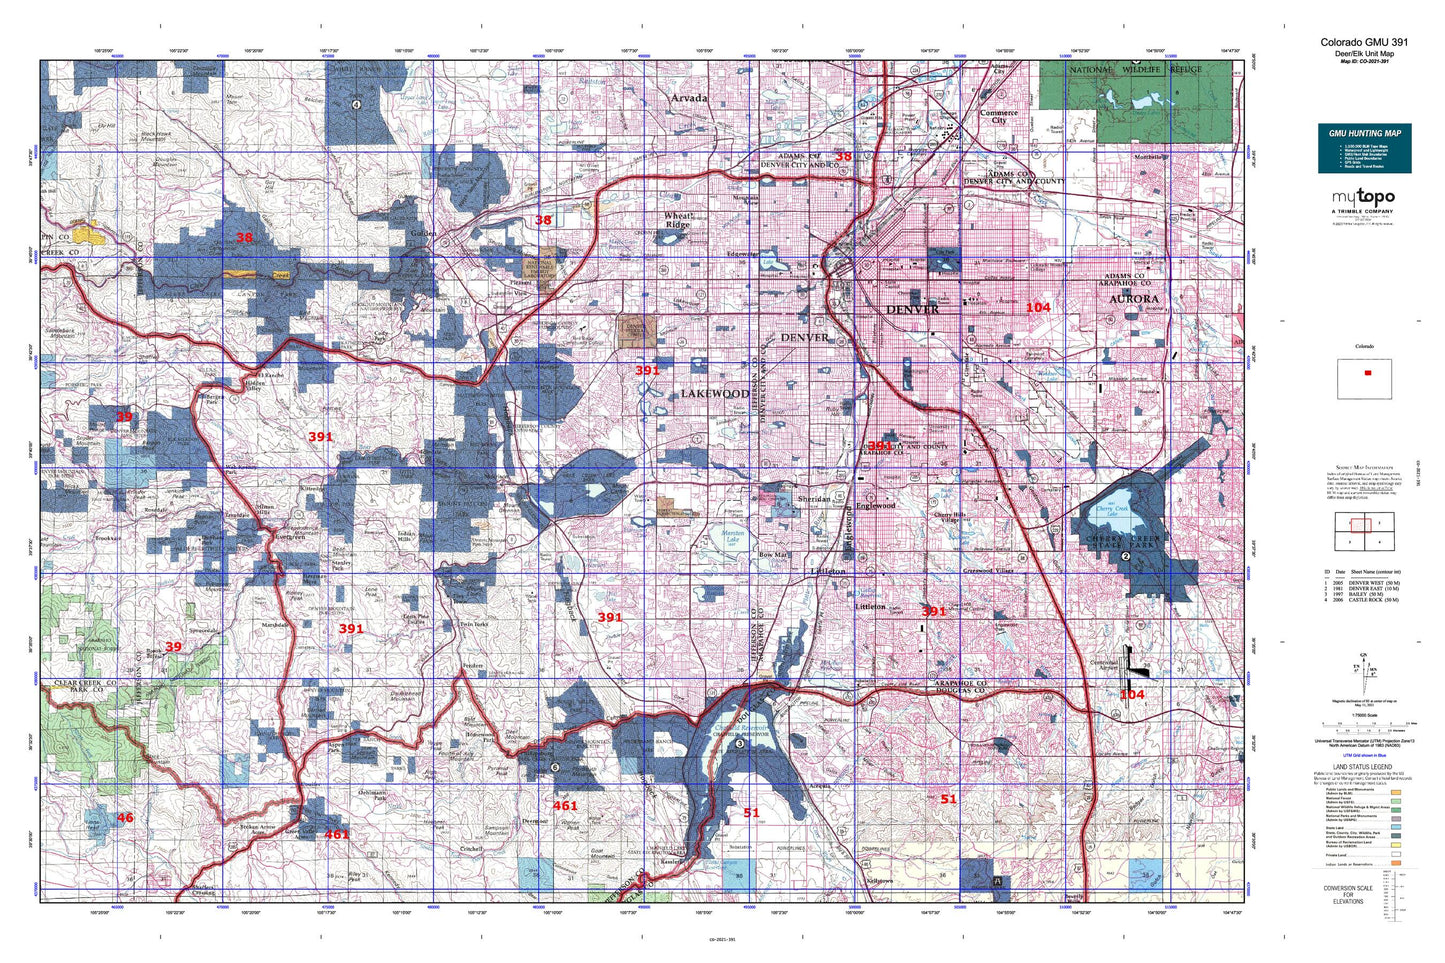 Colorado GMU 391 Map Image